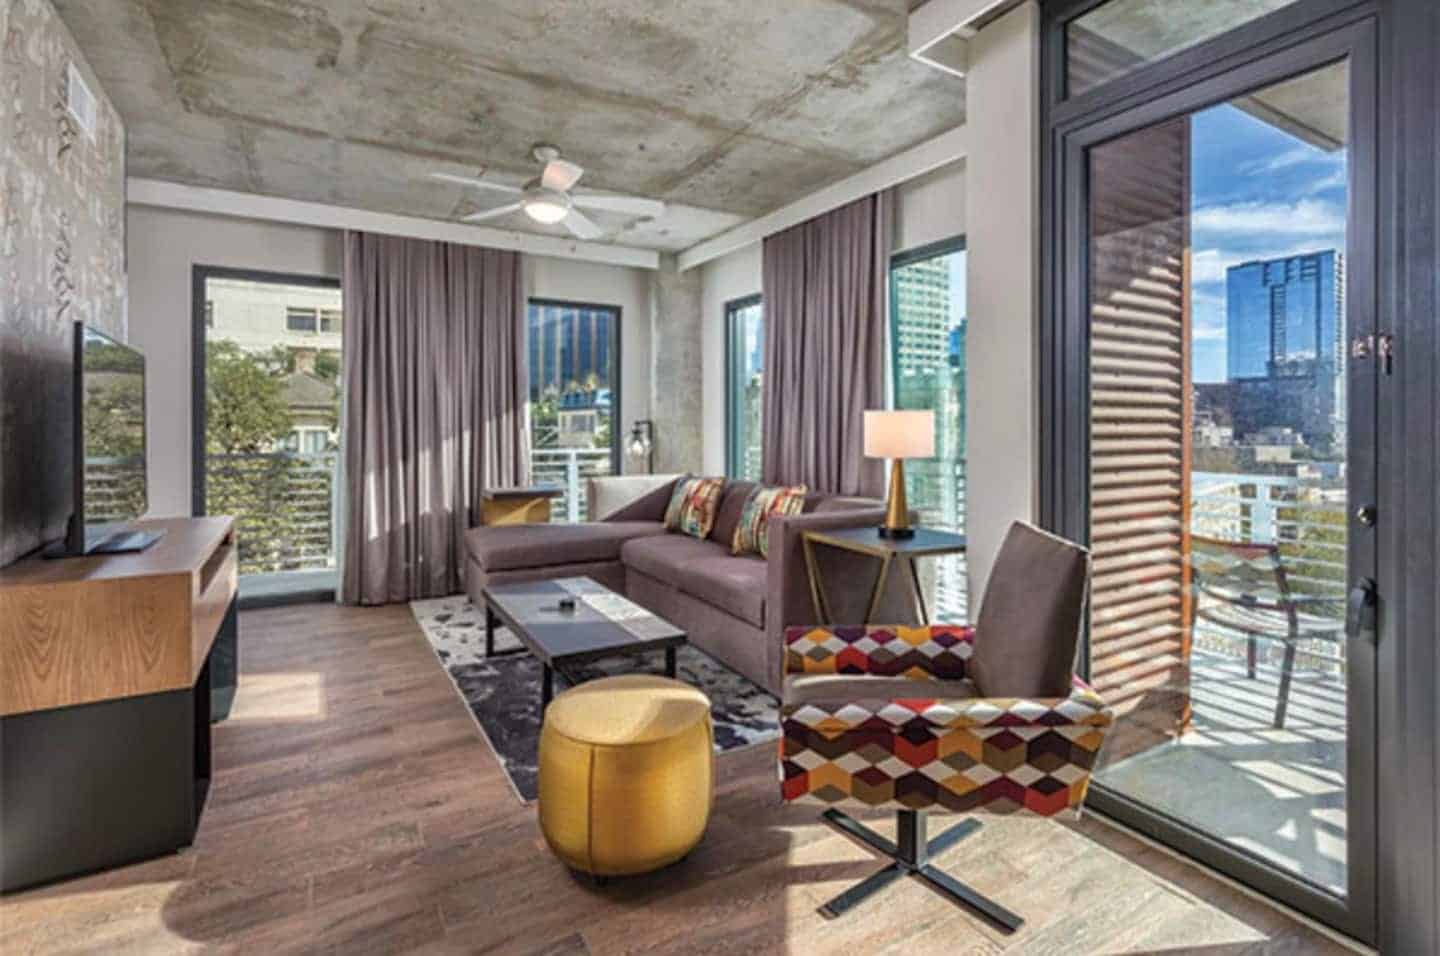 Image of Airbnb rental in Austin, Texas